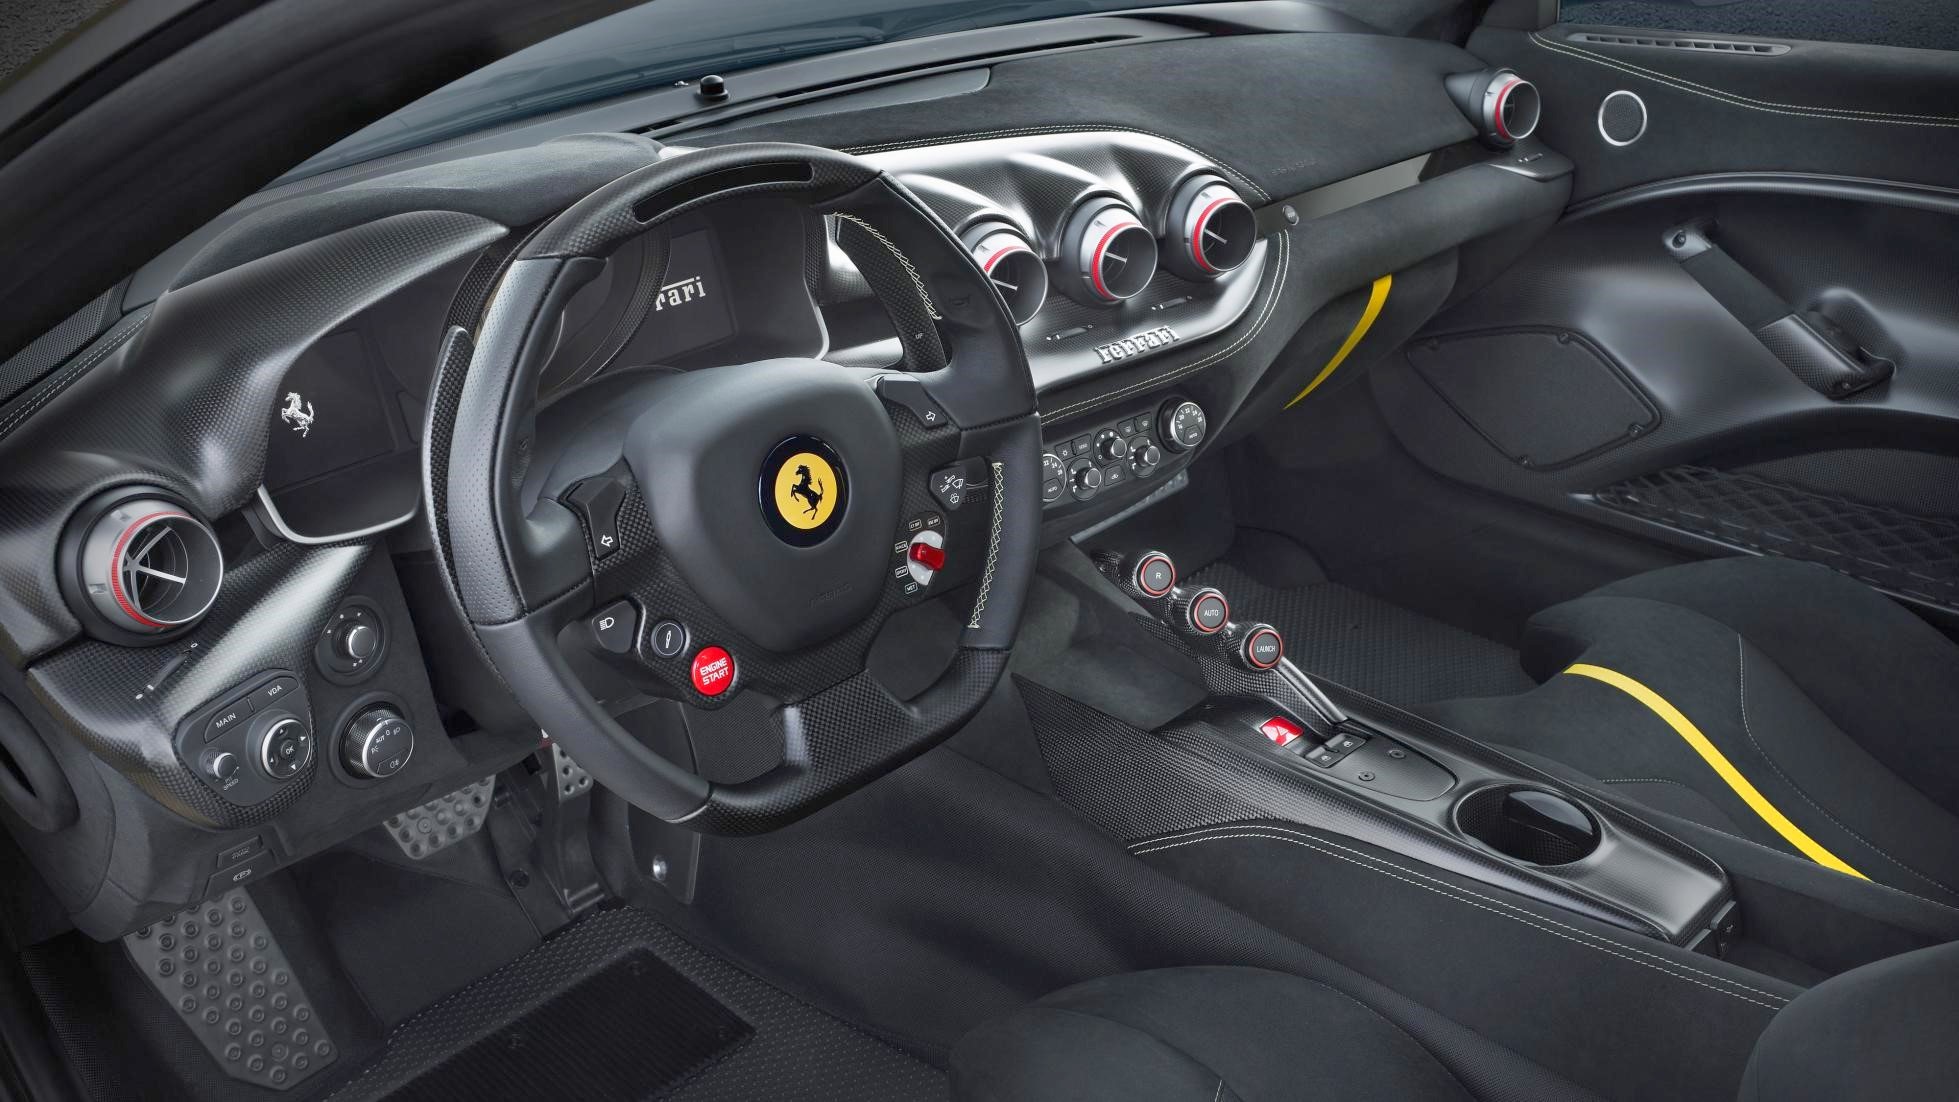 The interior is all Ferrari